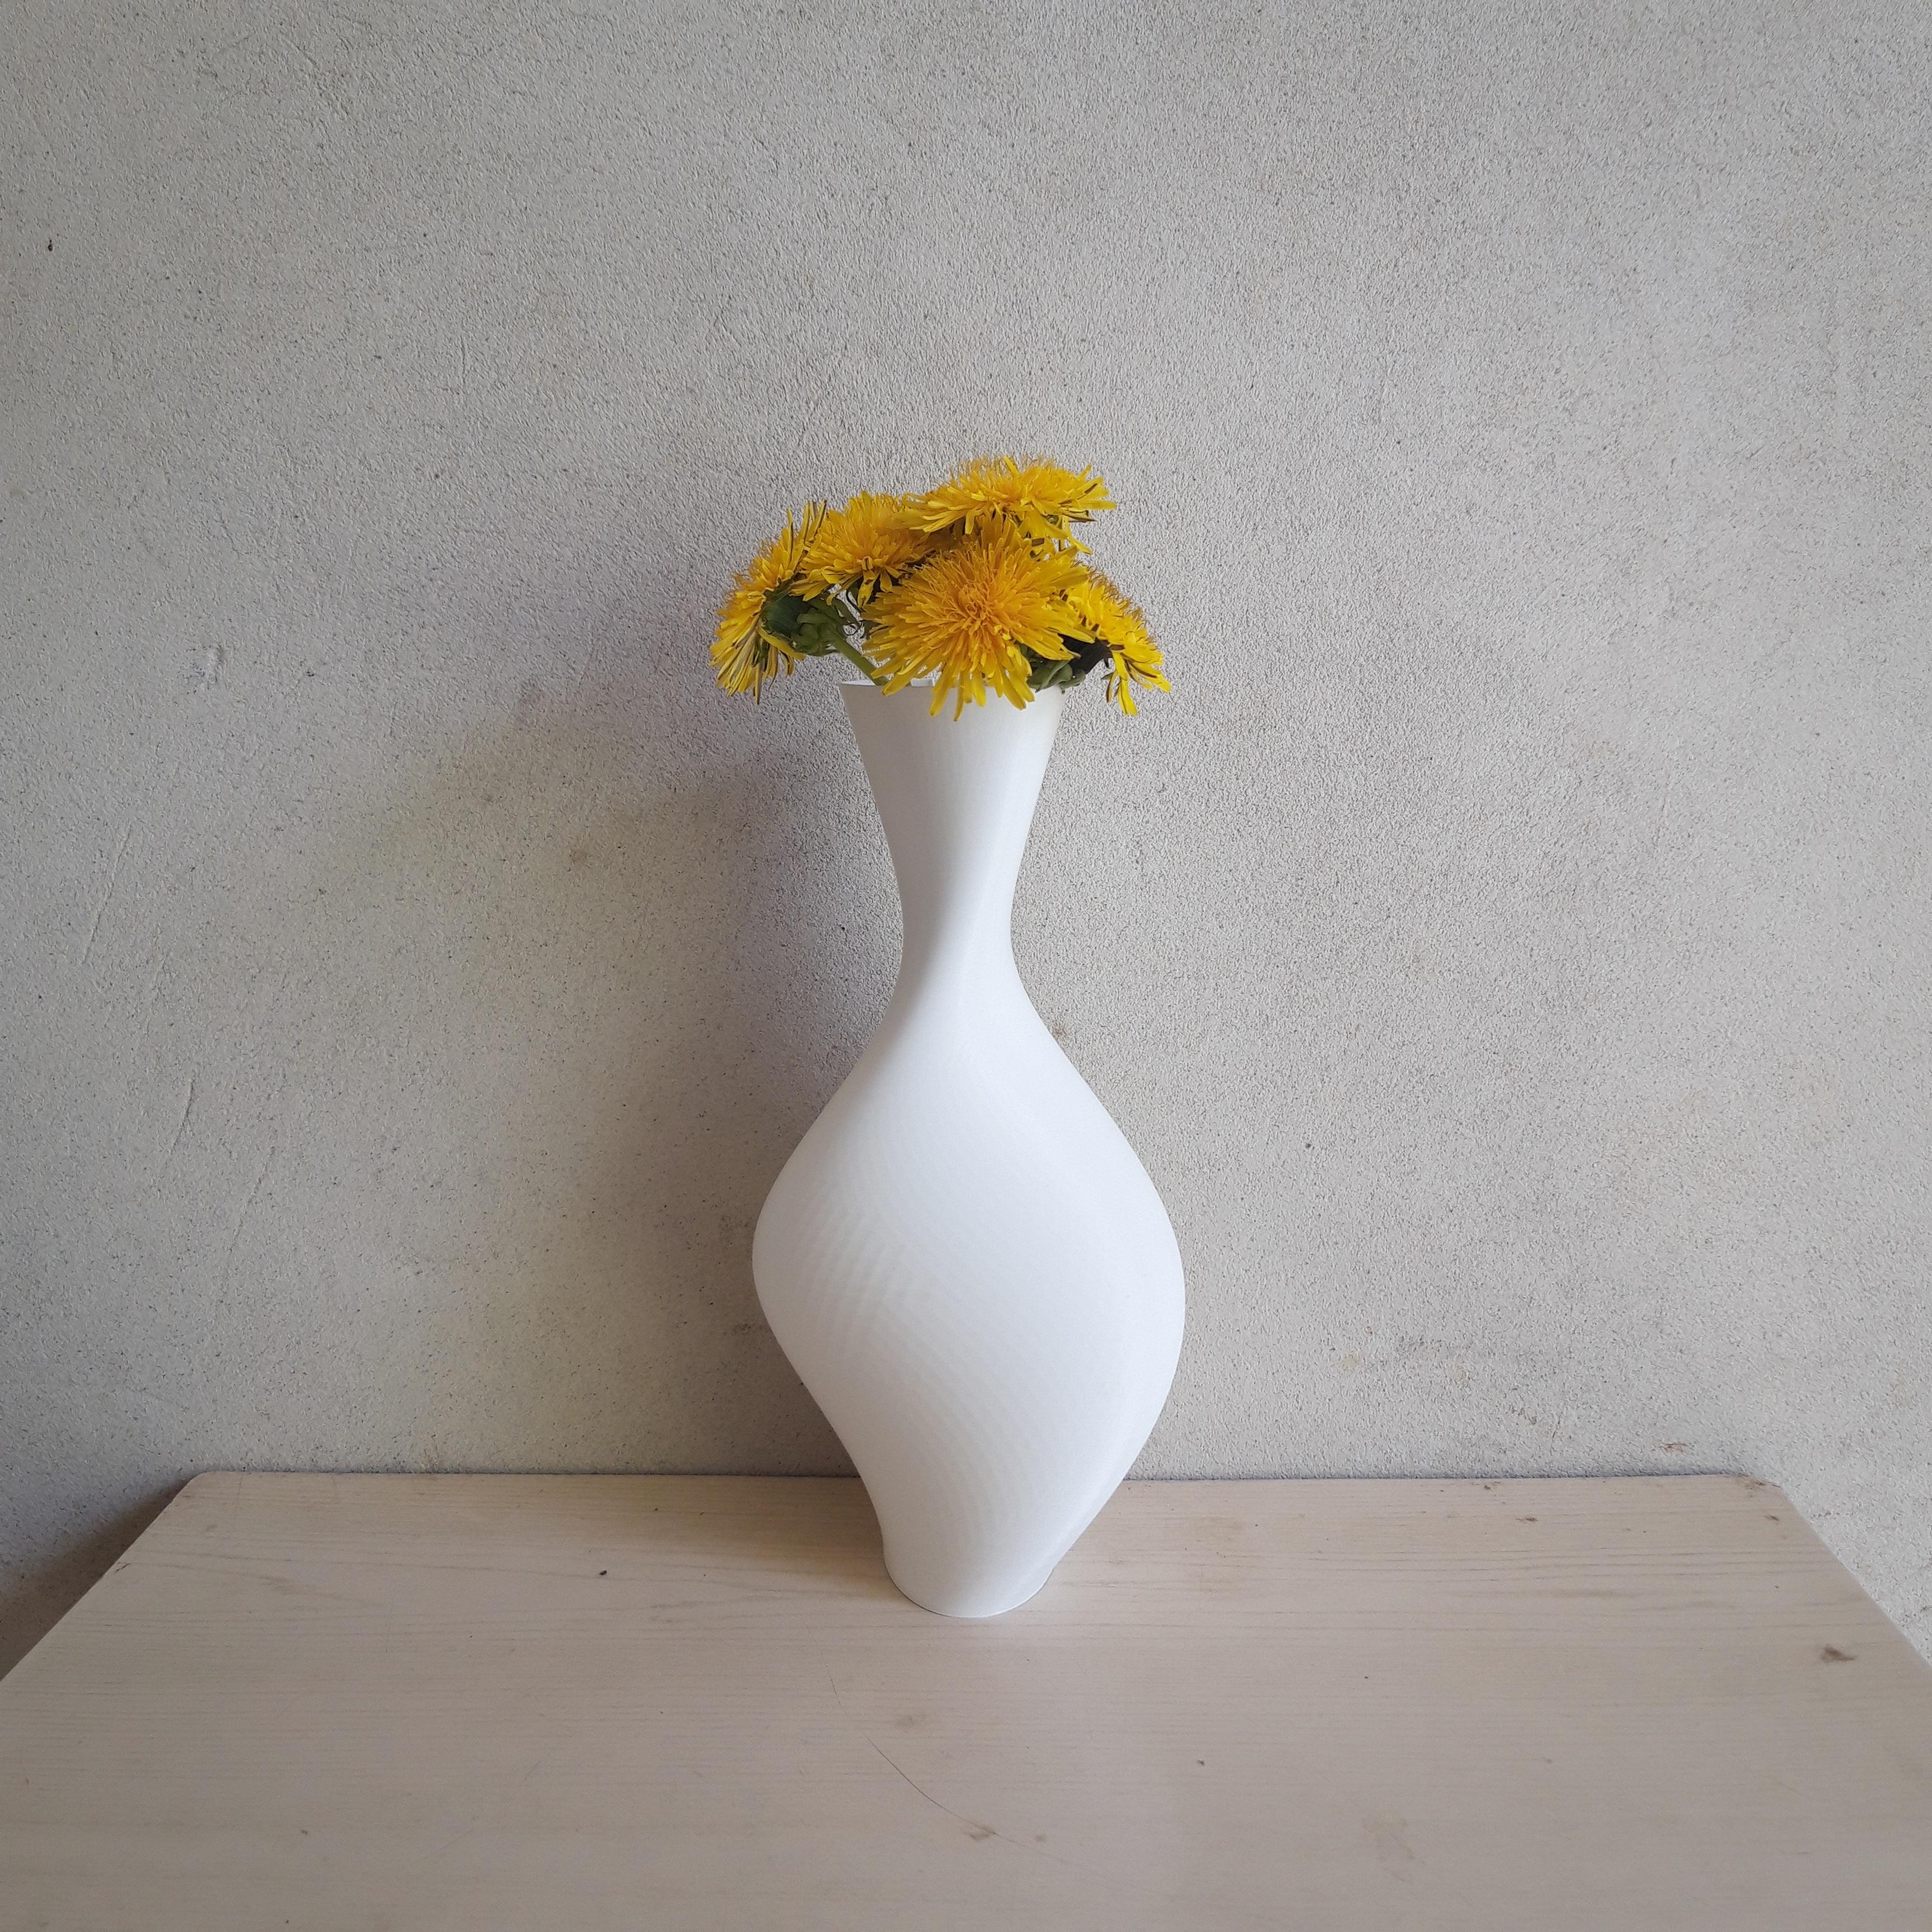 Elliptical vase 3d model